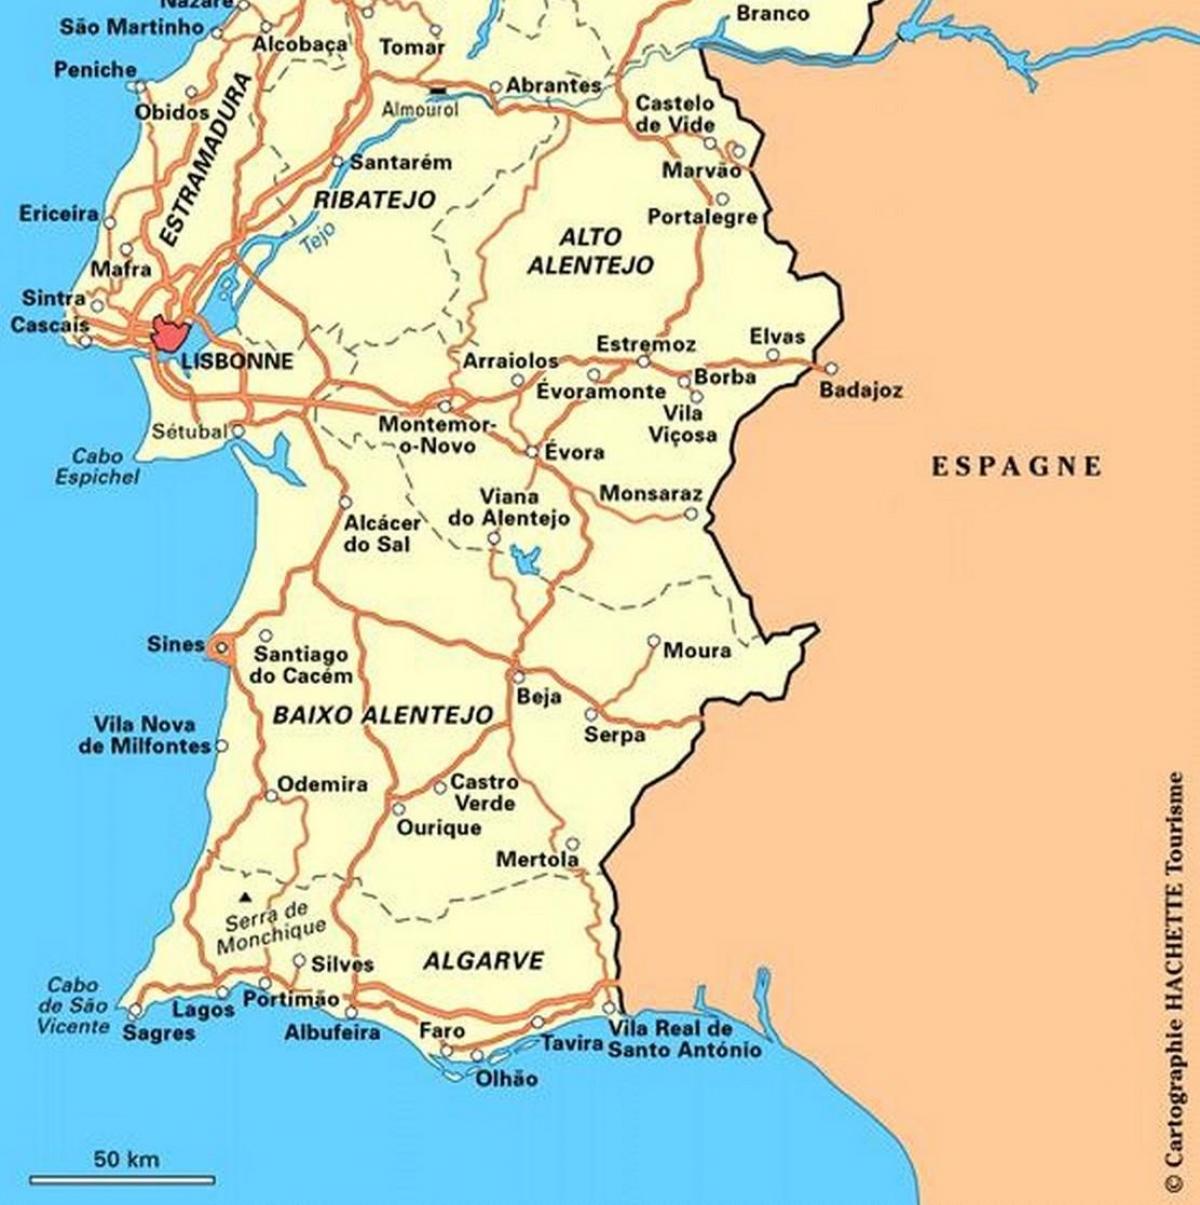 Mapa del sur de Portugal